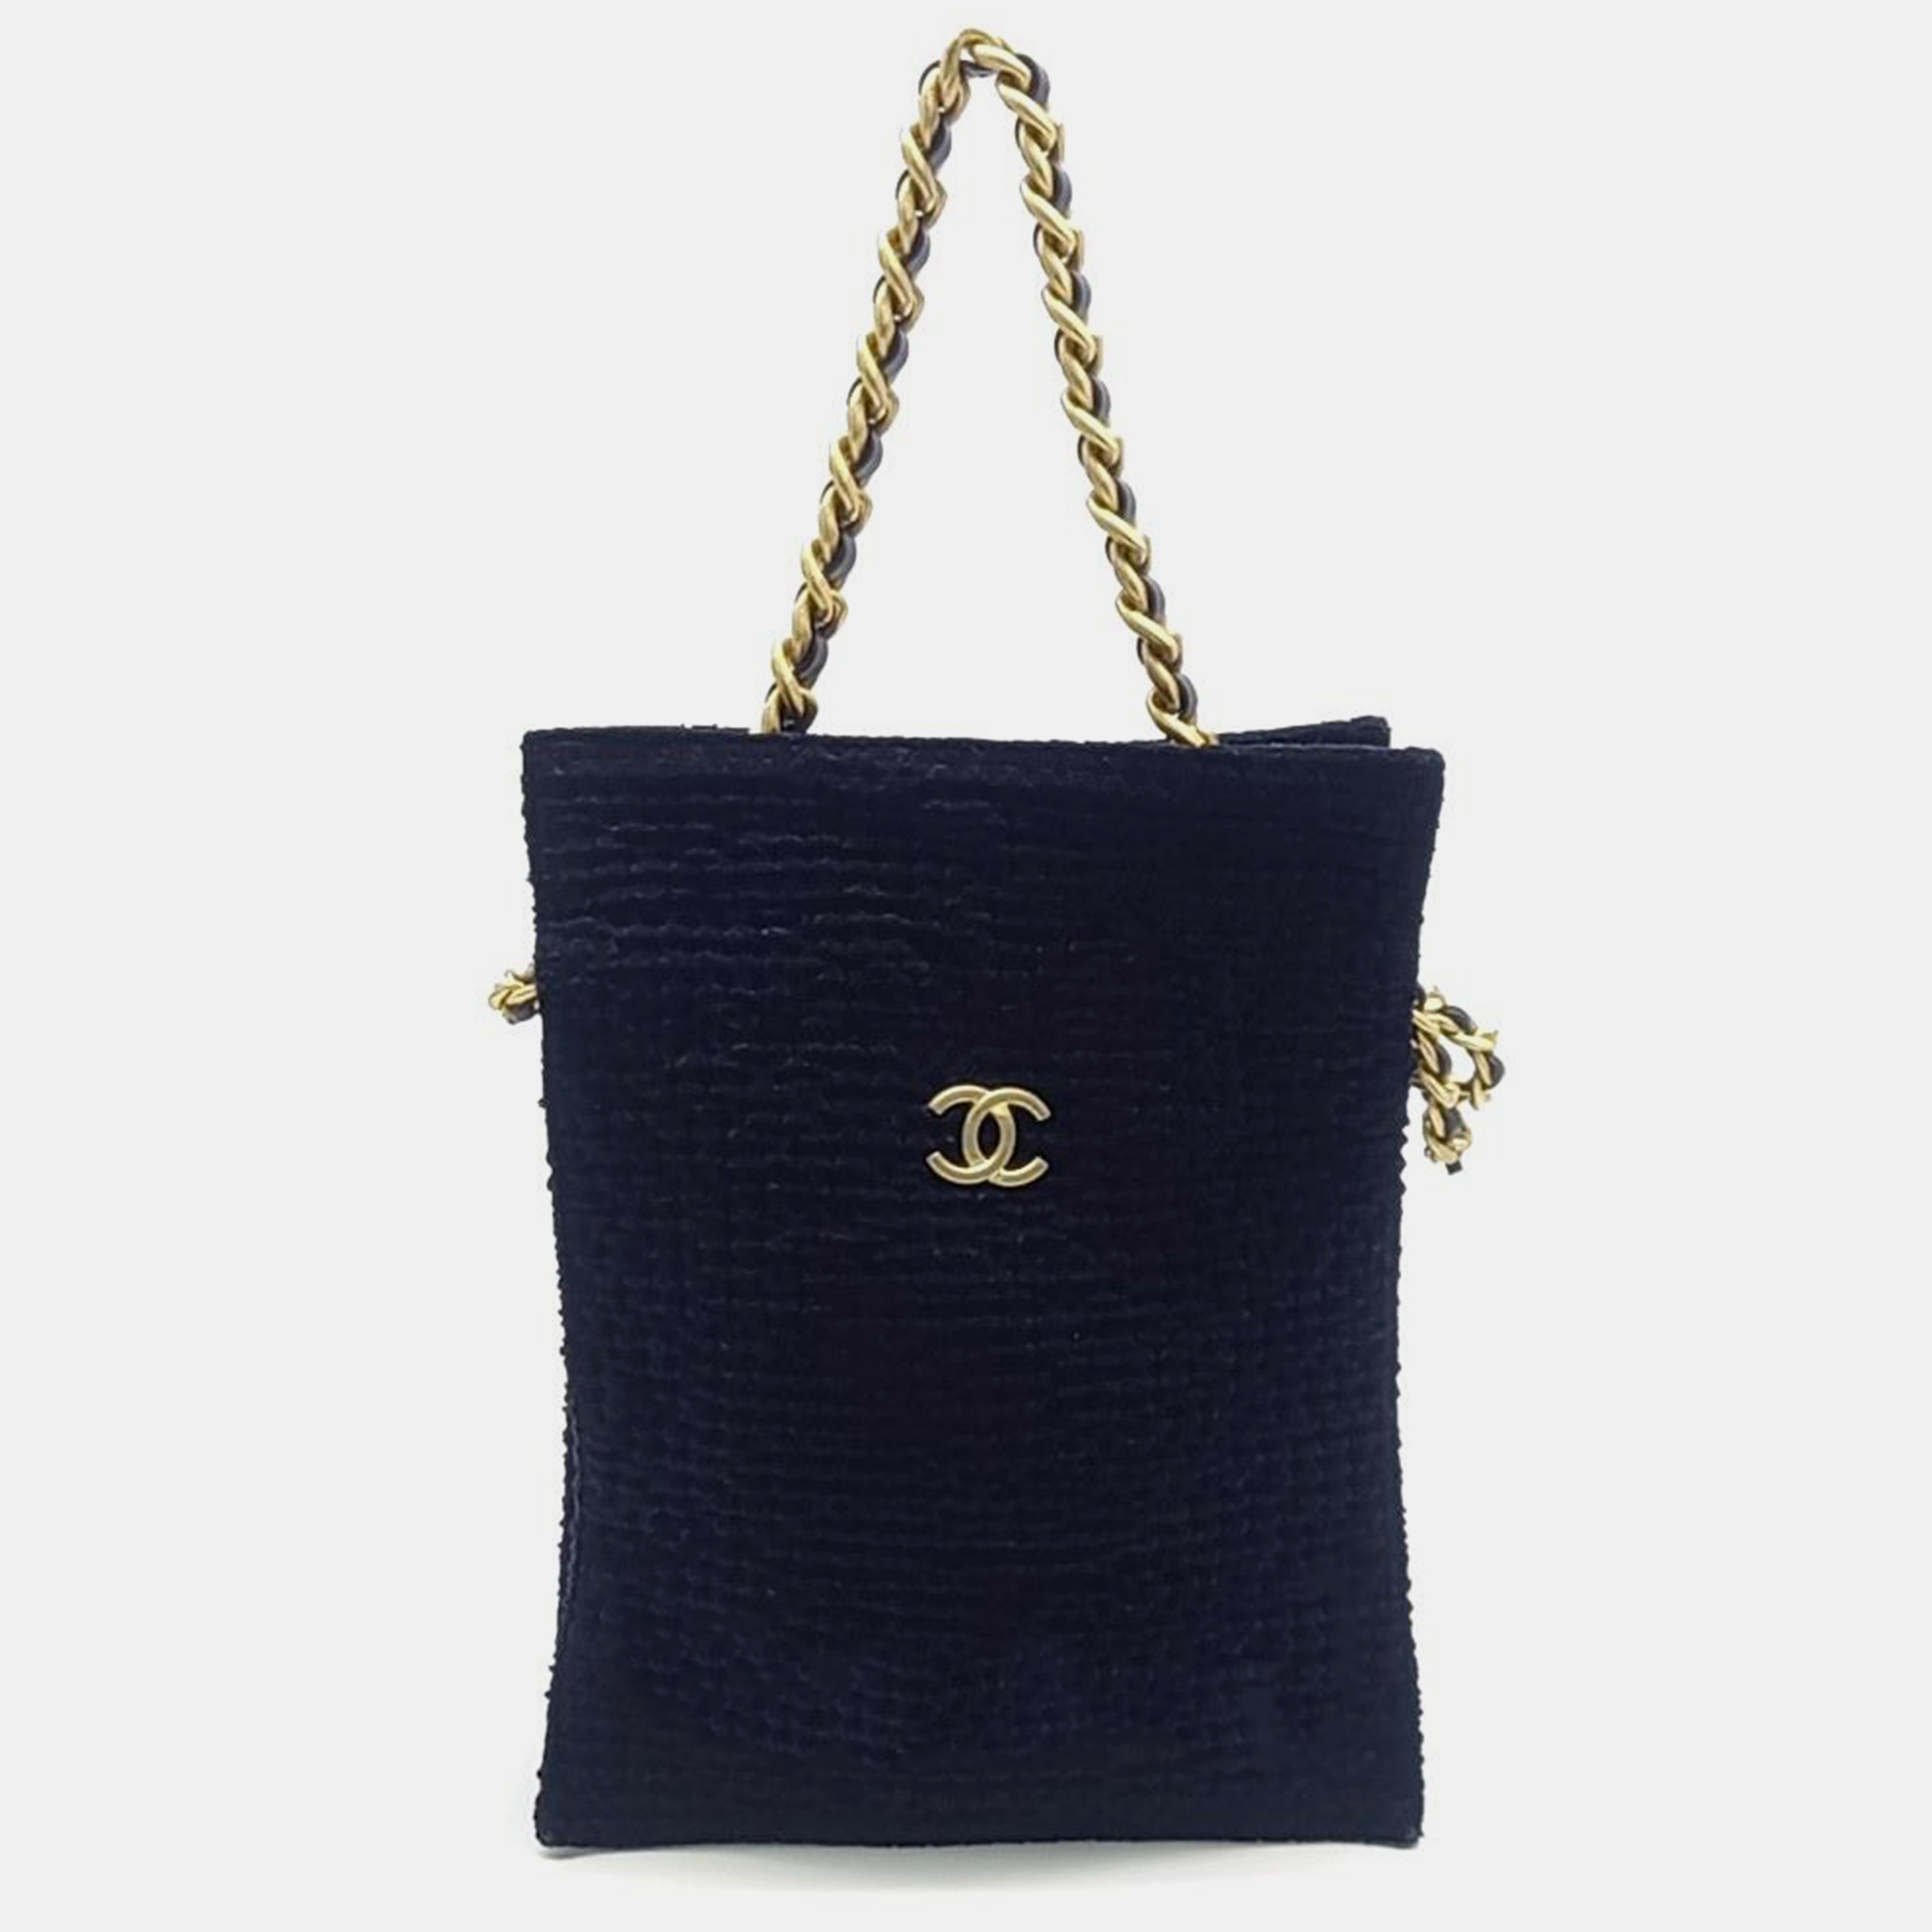 Chanel dark navy canvas shopping tote bag